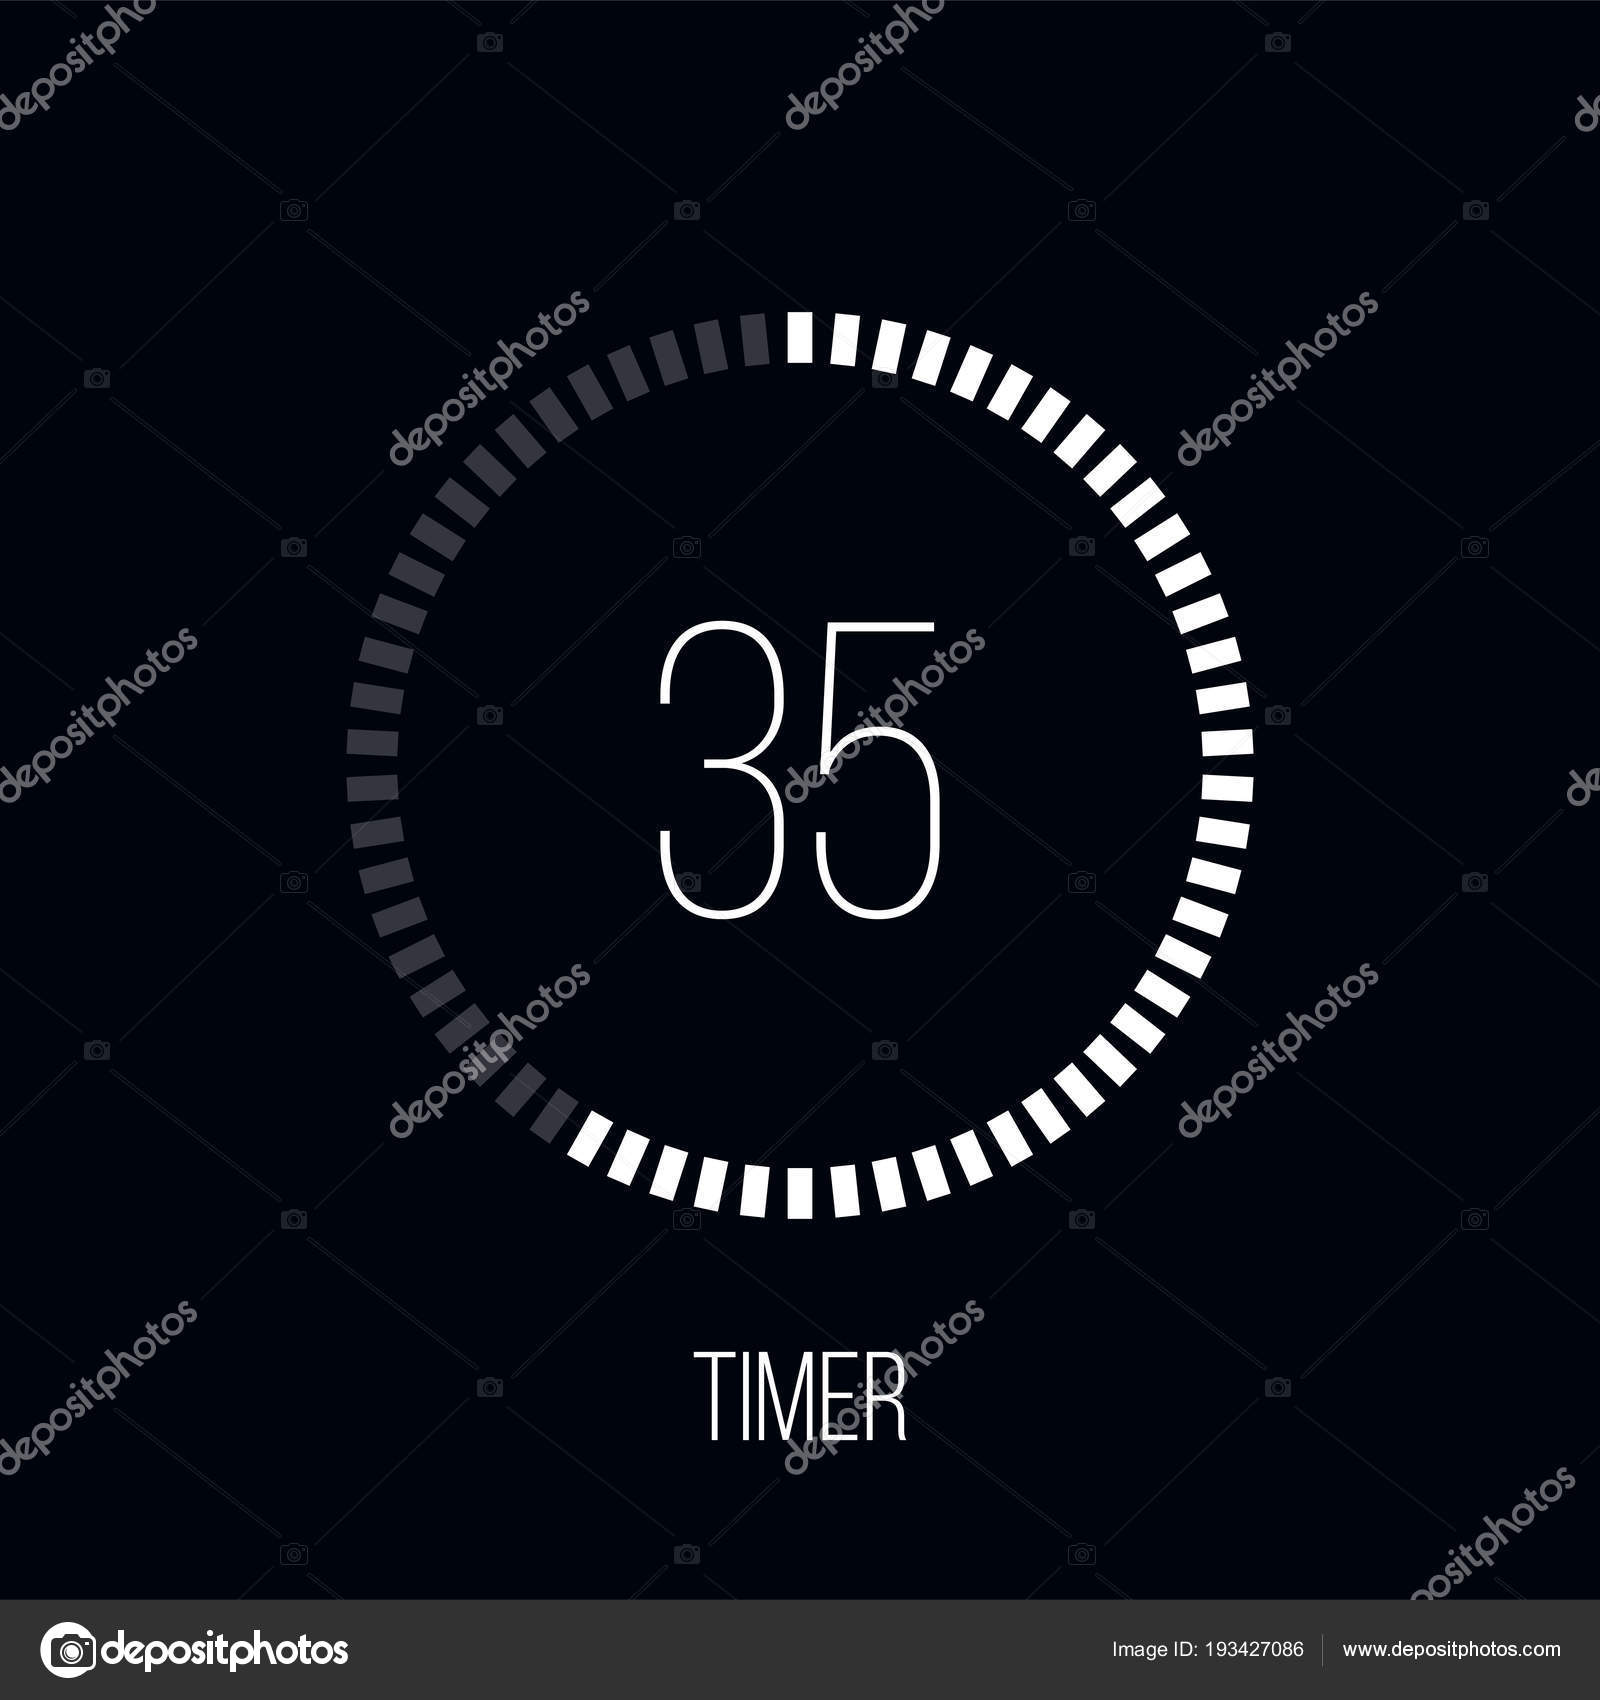 https://st3.depositphotos.com/16835446/19342/v/1600/depositphotos_193427086-stock-illustration-countdown-timer-digital-counter-clock.jpg